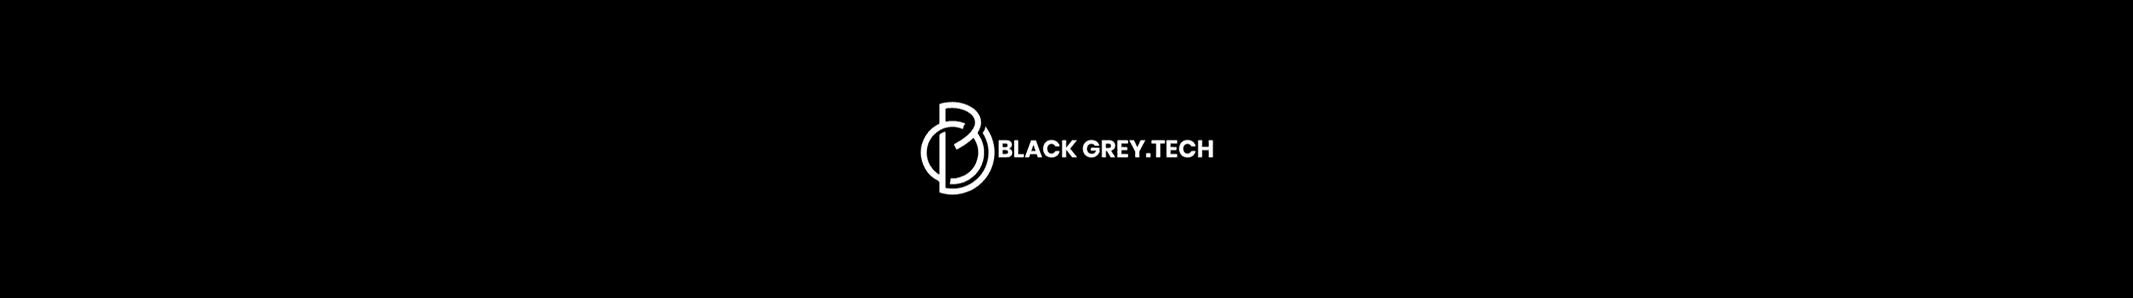 BlackGrey.tech LLC のプロファイルバナー